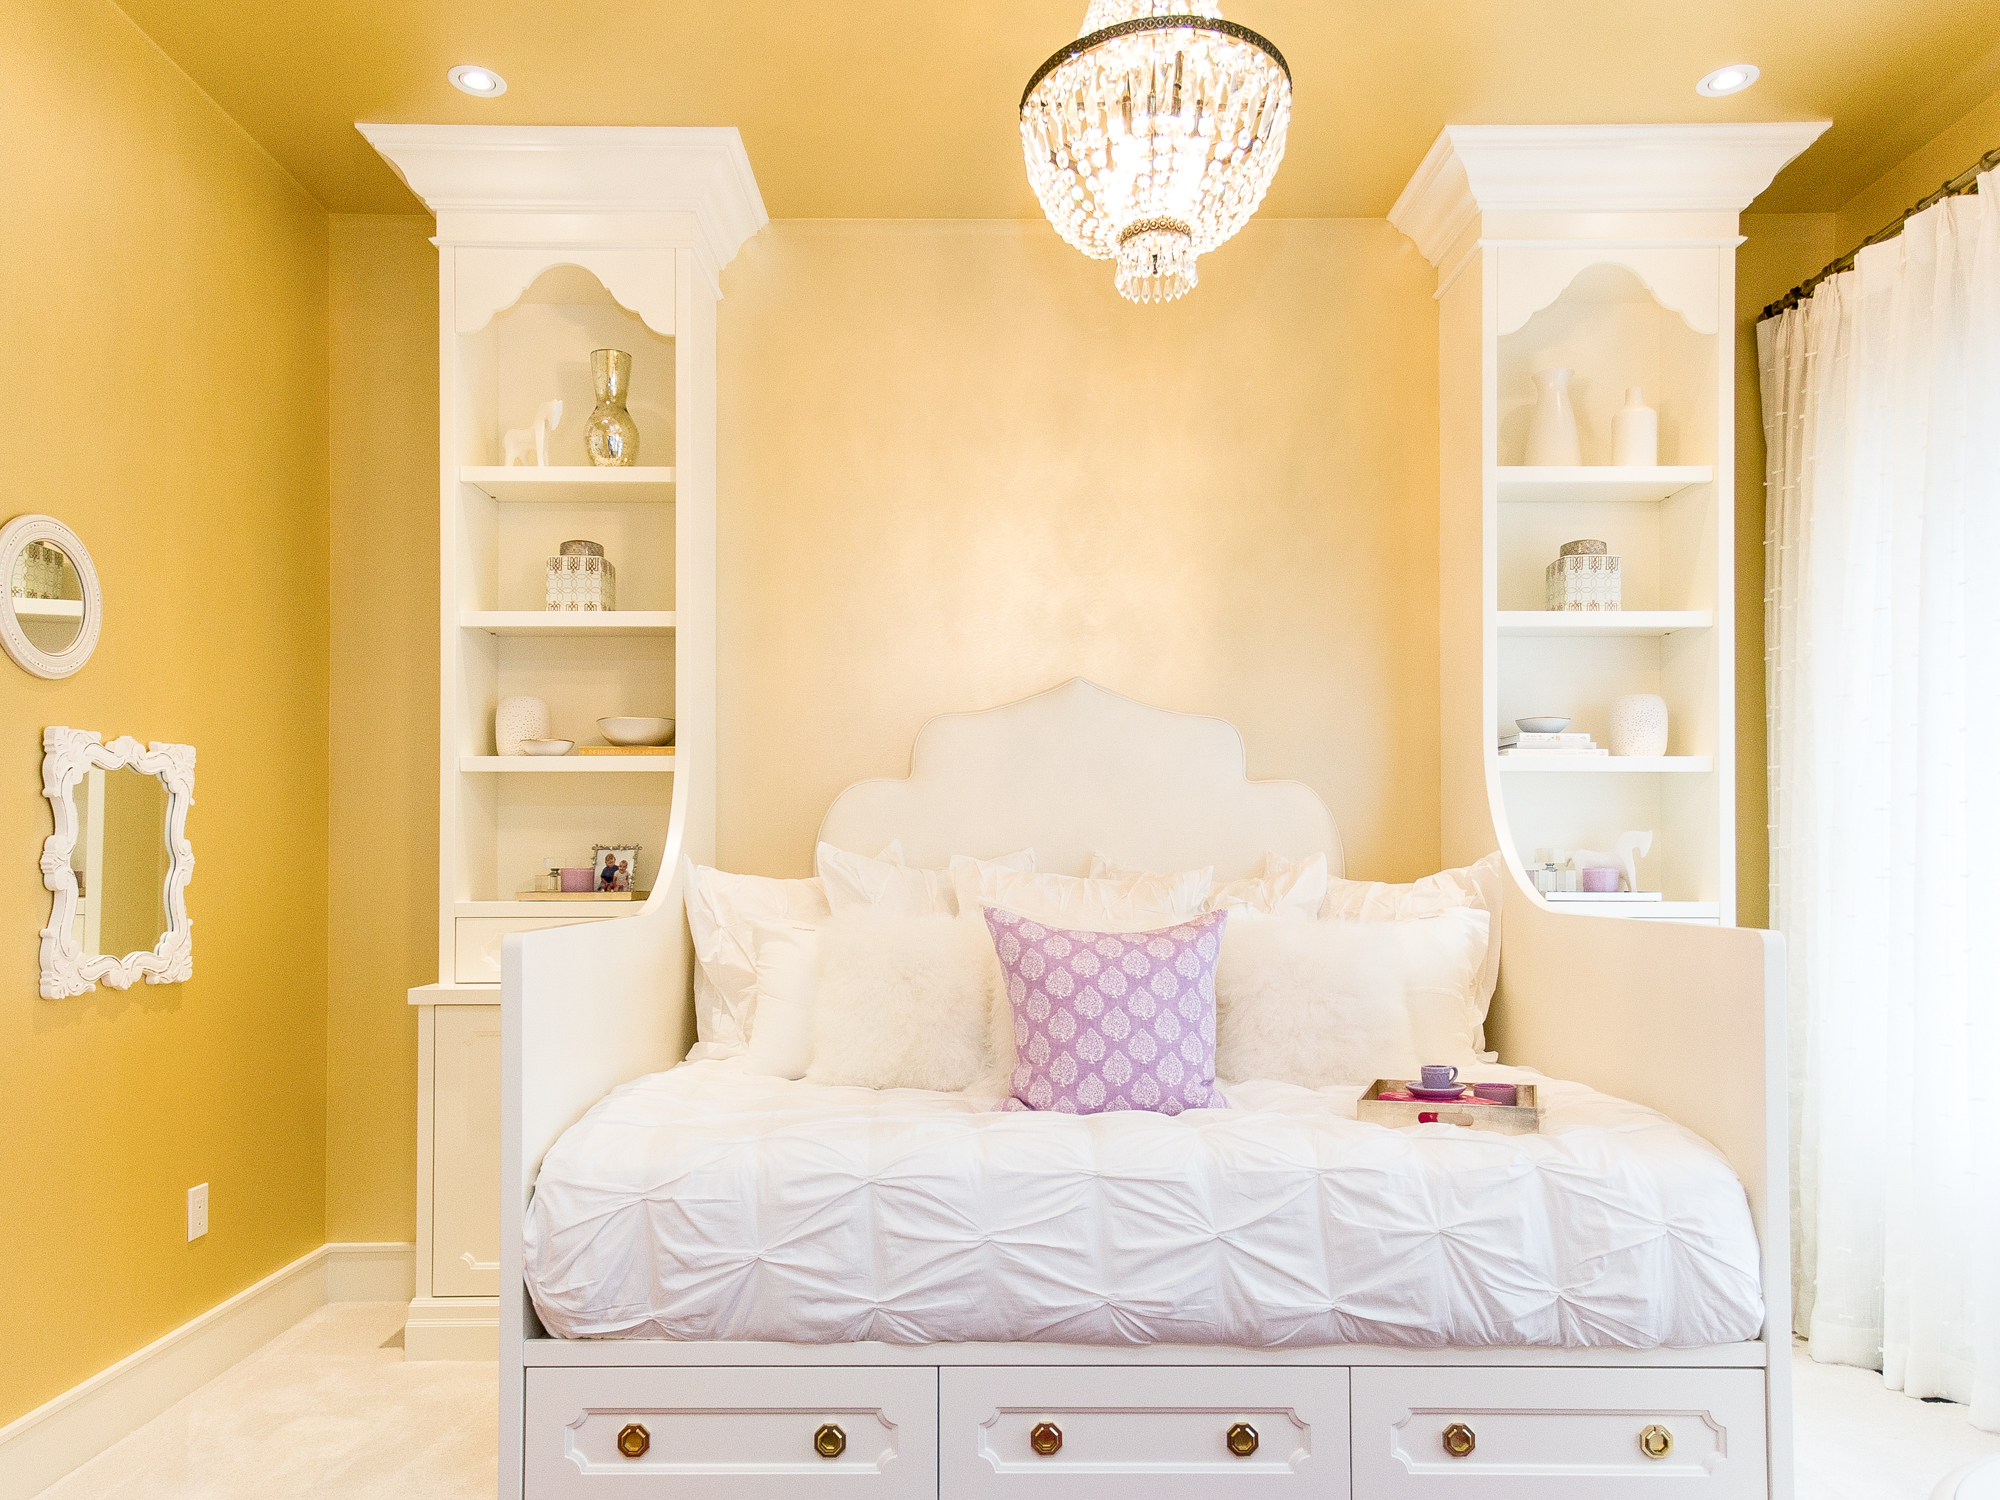 Little girl's bedroom with custom built-in shelves around bed